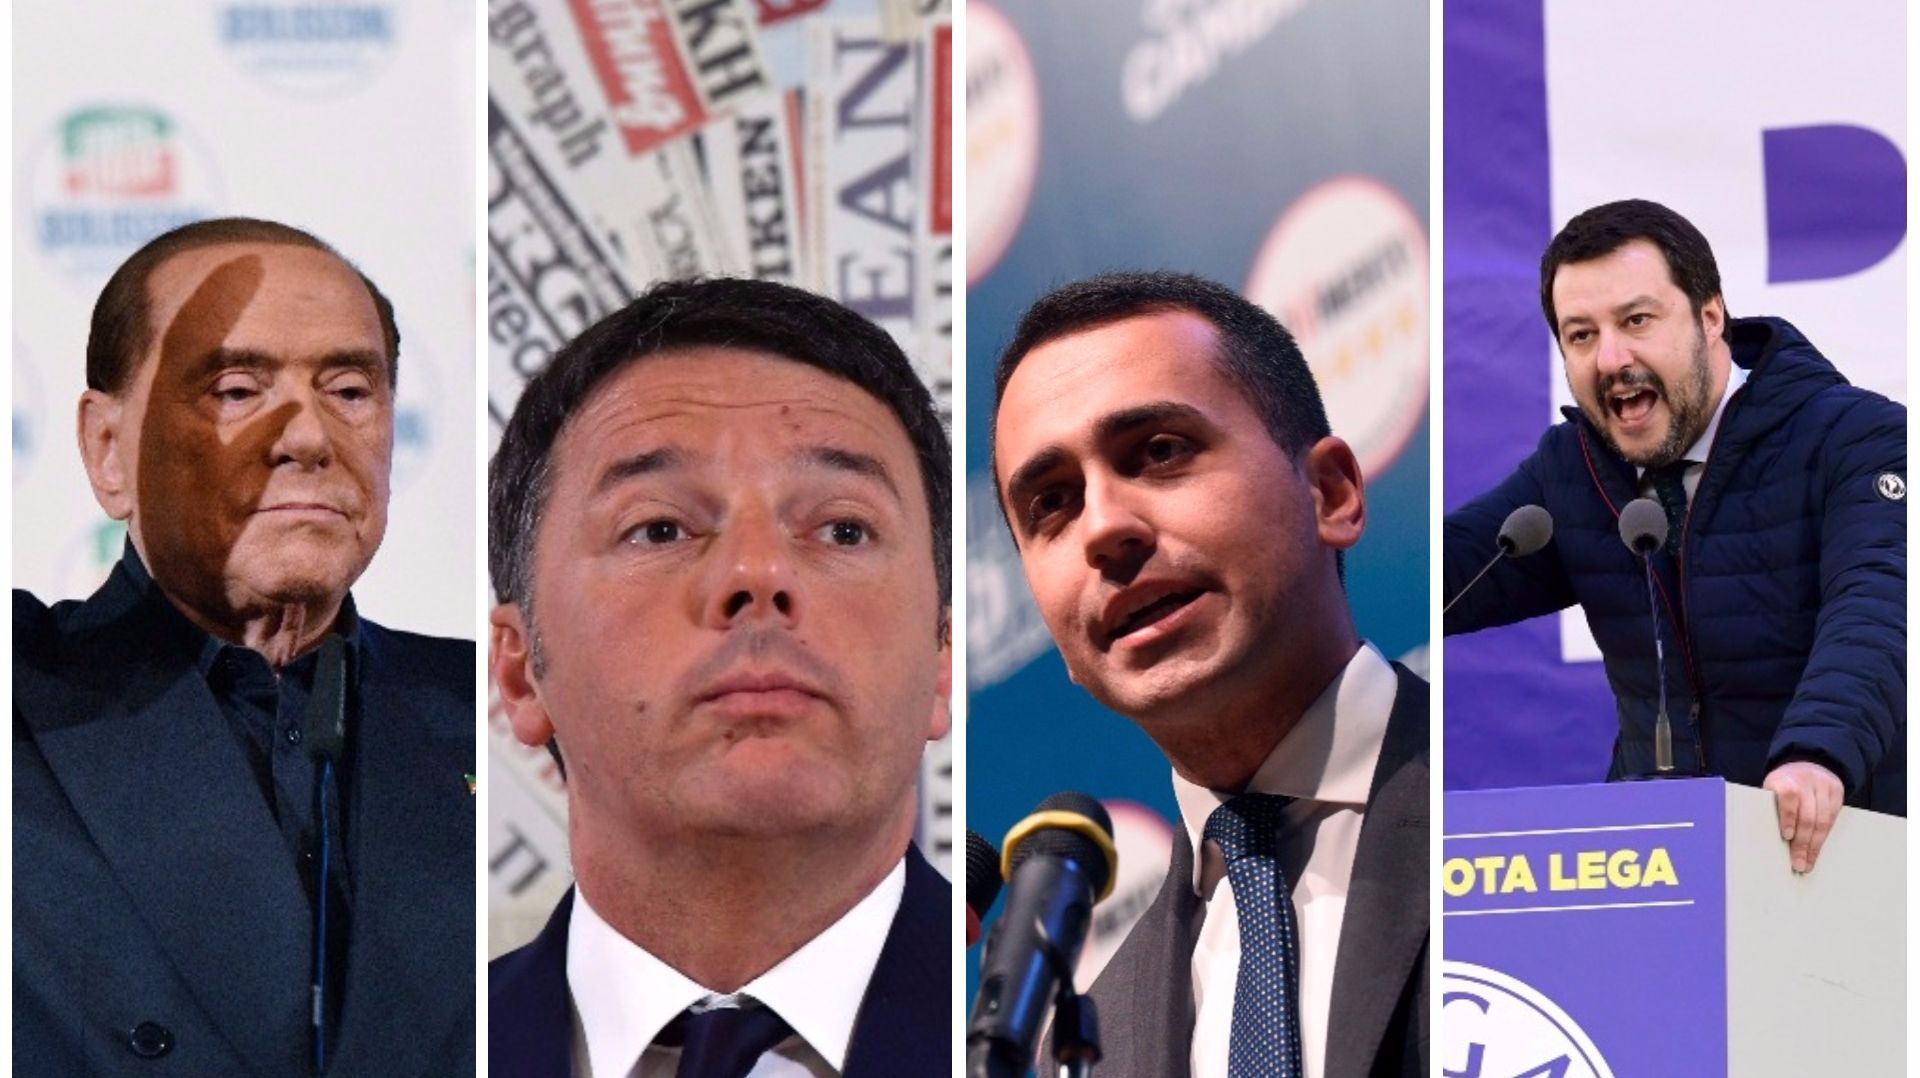 Silvio Berlusconi, Matteo Renzi, Luigi Di Maio, Matteo Salvini, 